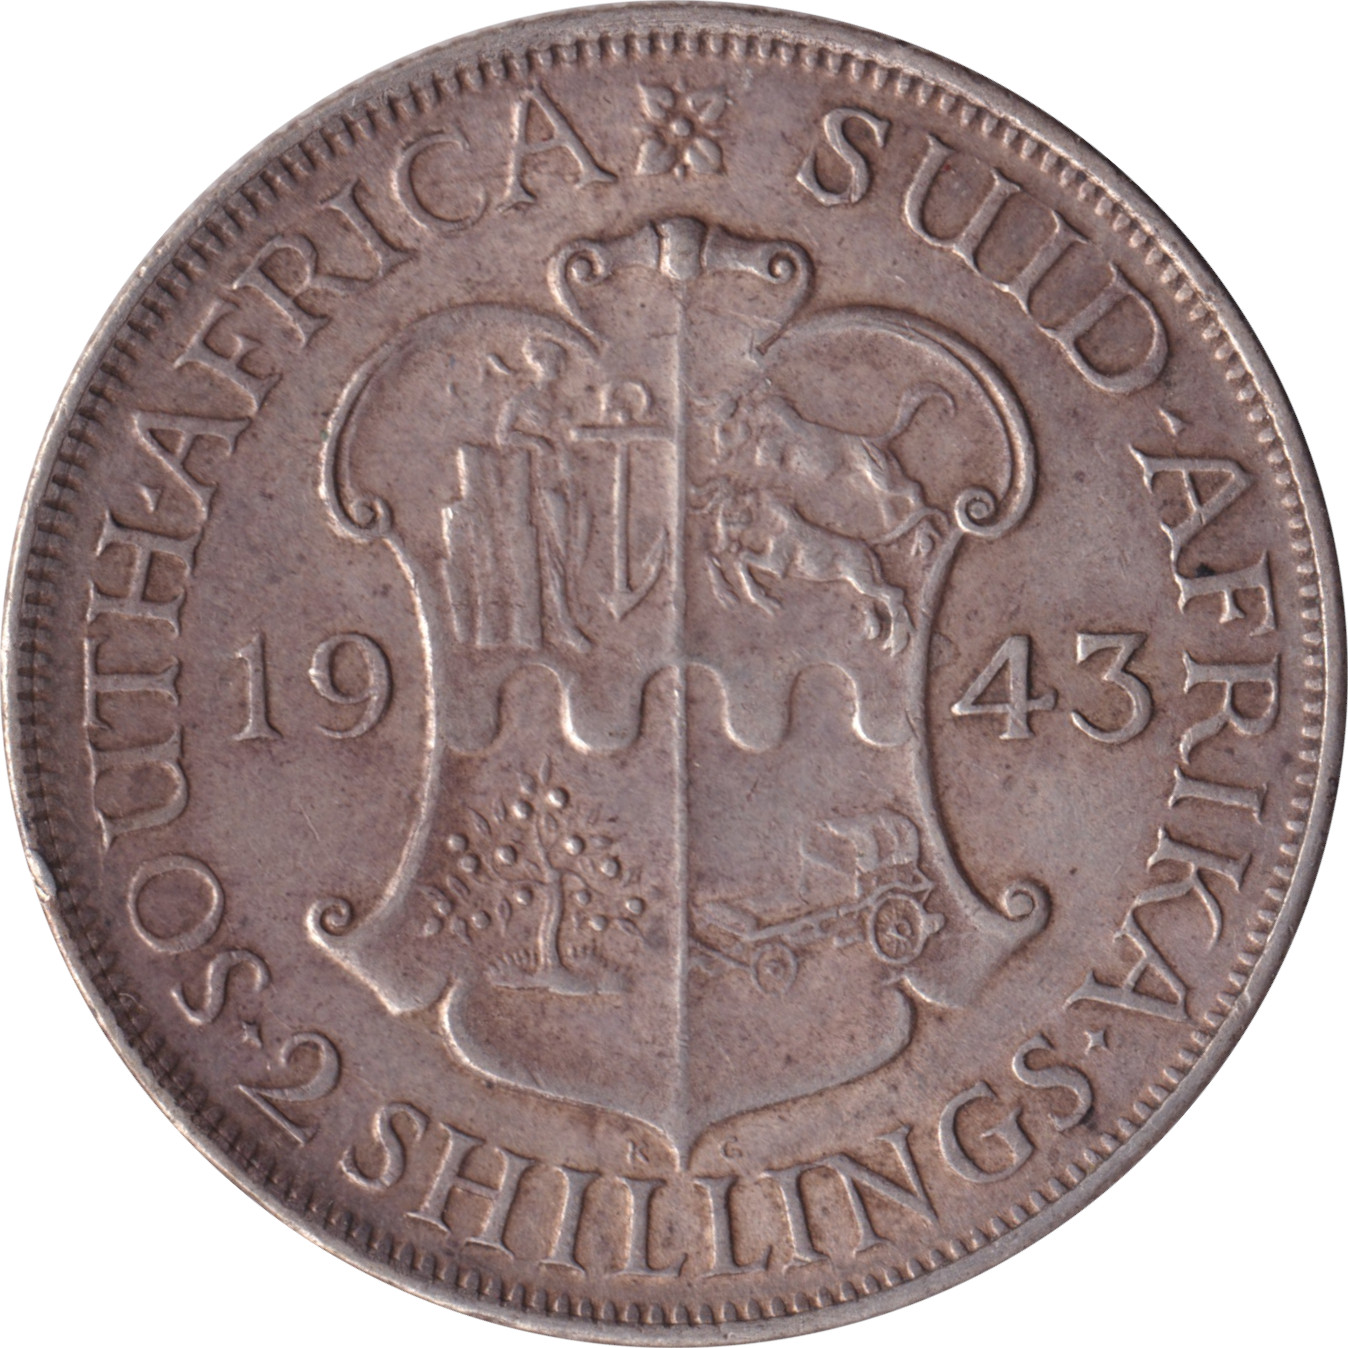 2 shillings - George VI